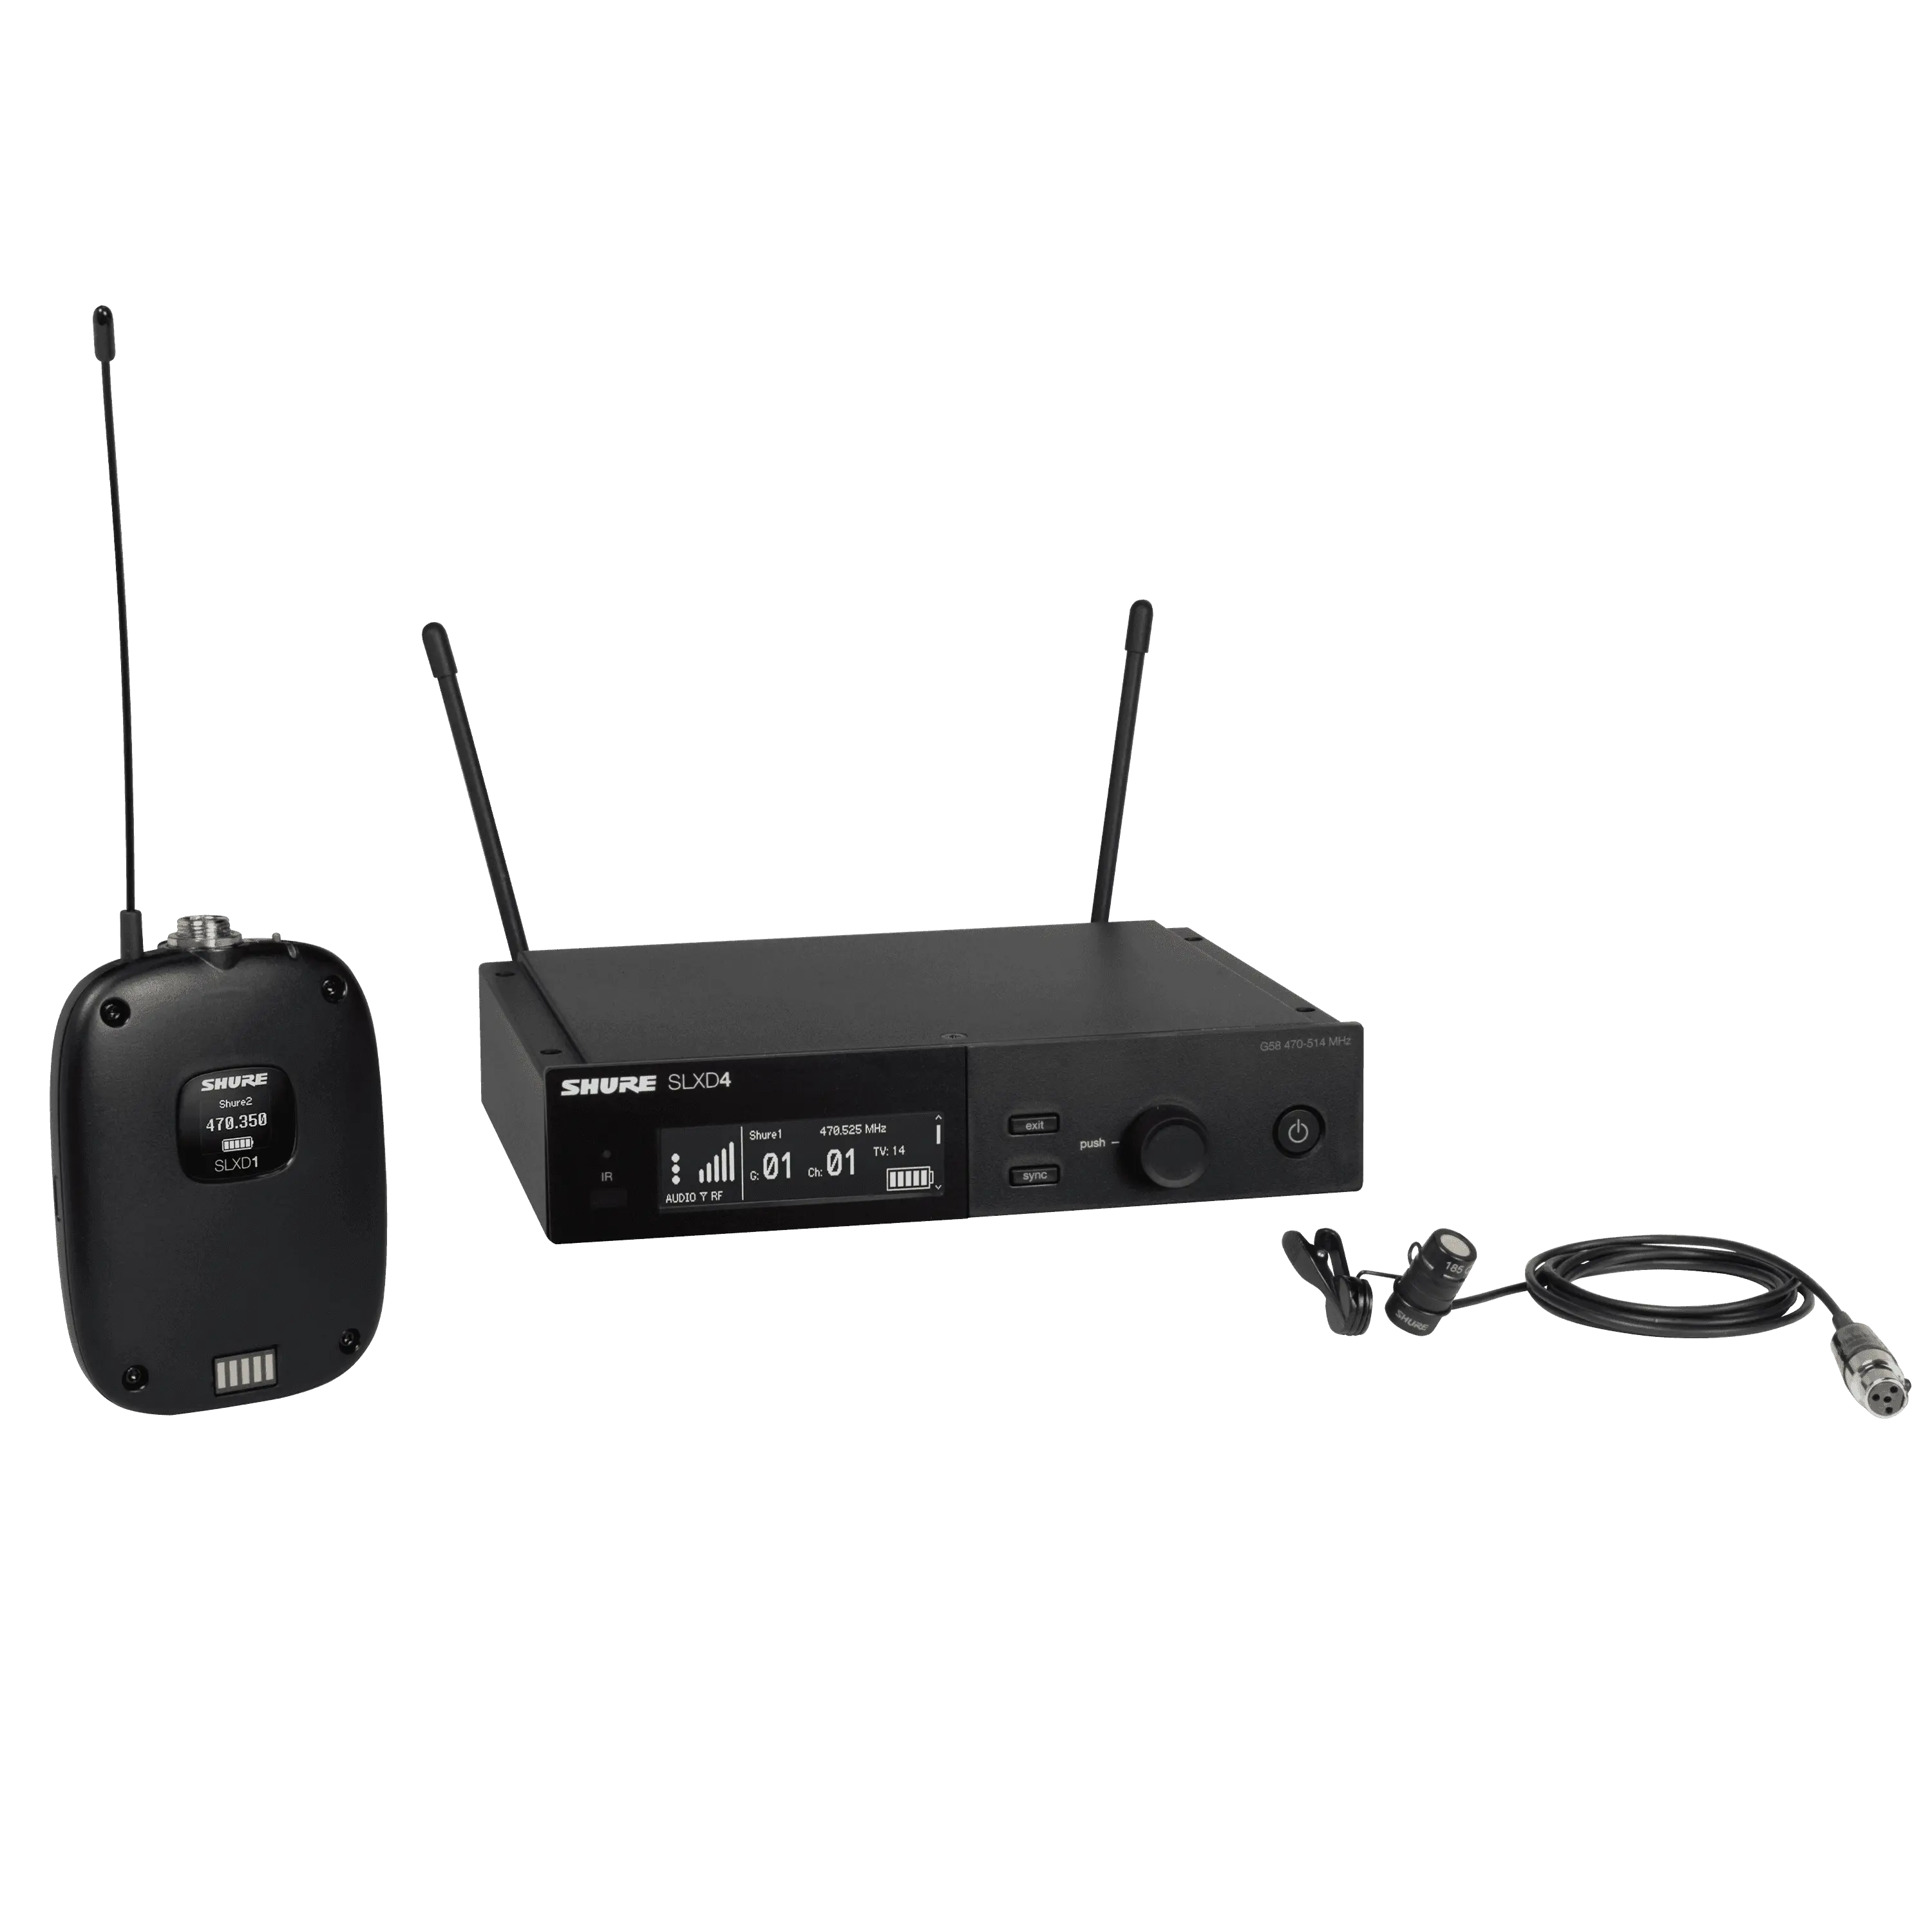 SLXD14/83 - Wireless System with SLXD1 Bodypack Transmitter and